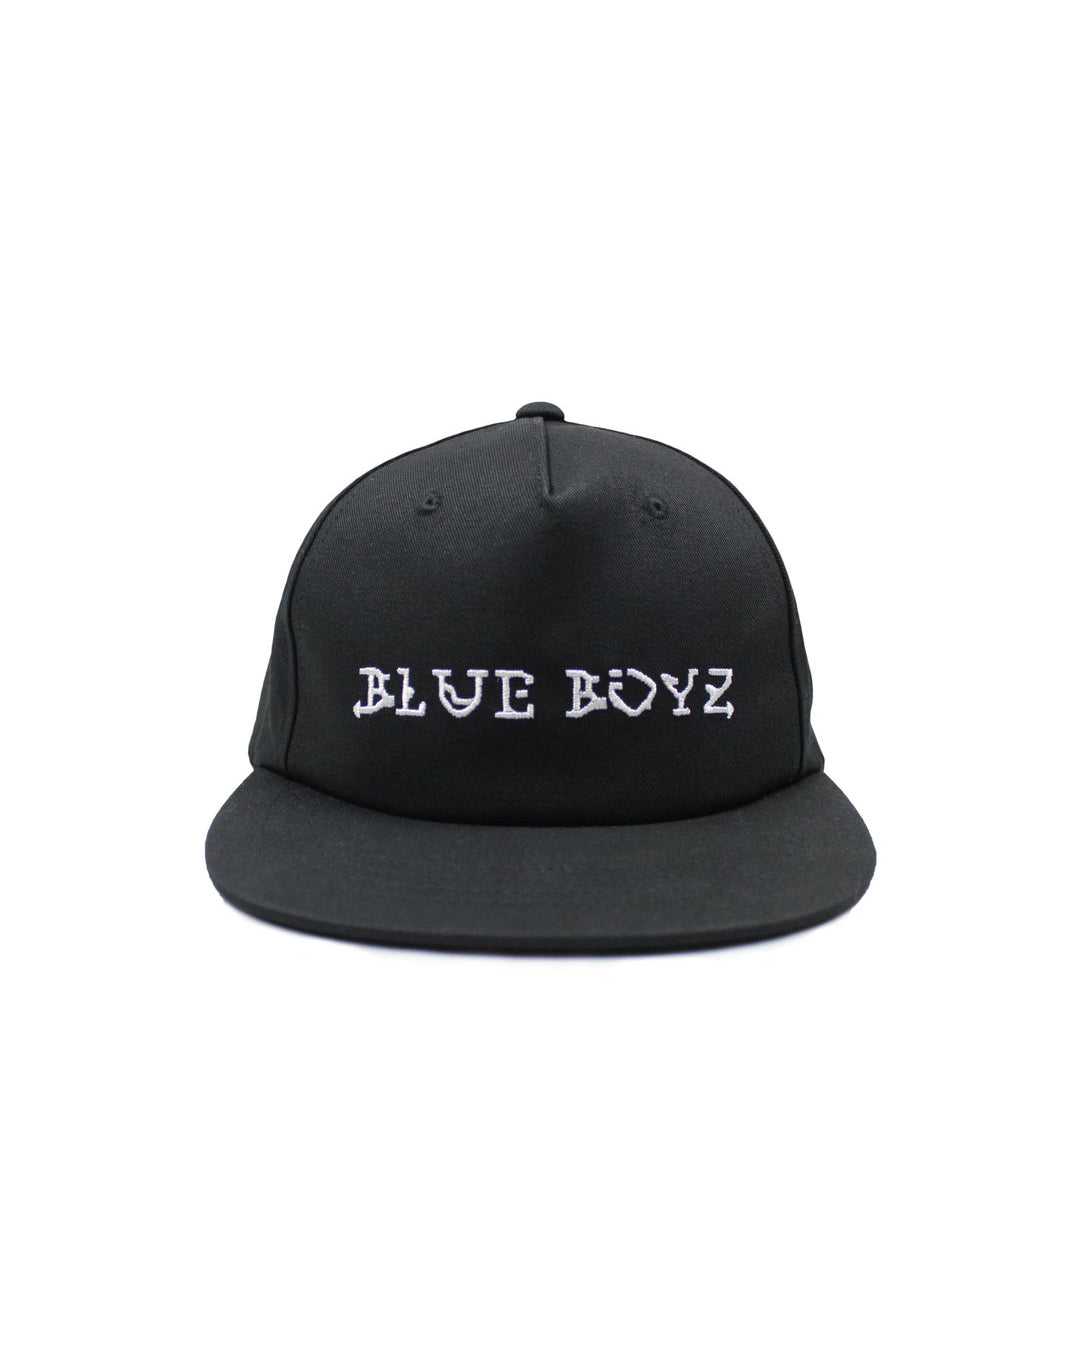 Blue Boyz Sports Club / CV 5 Panel Snapback cap